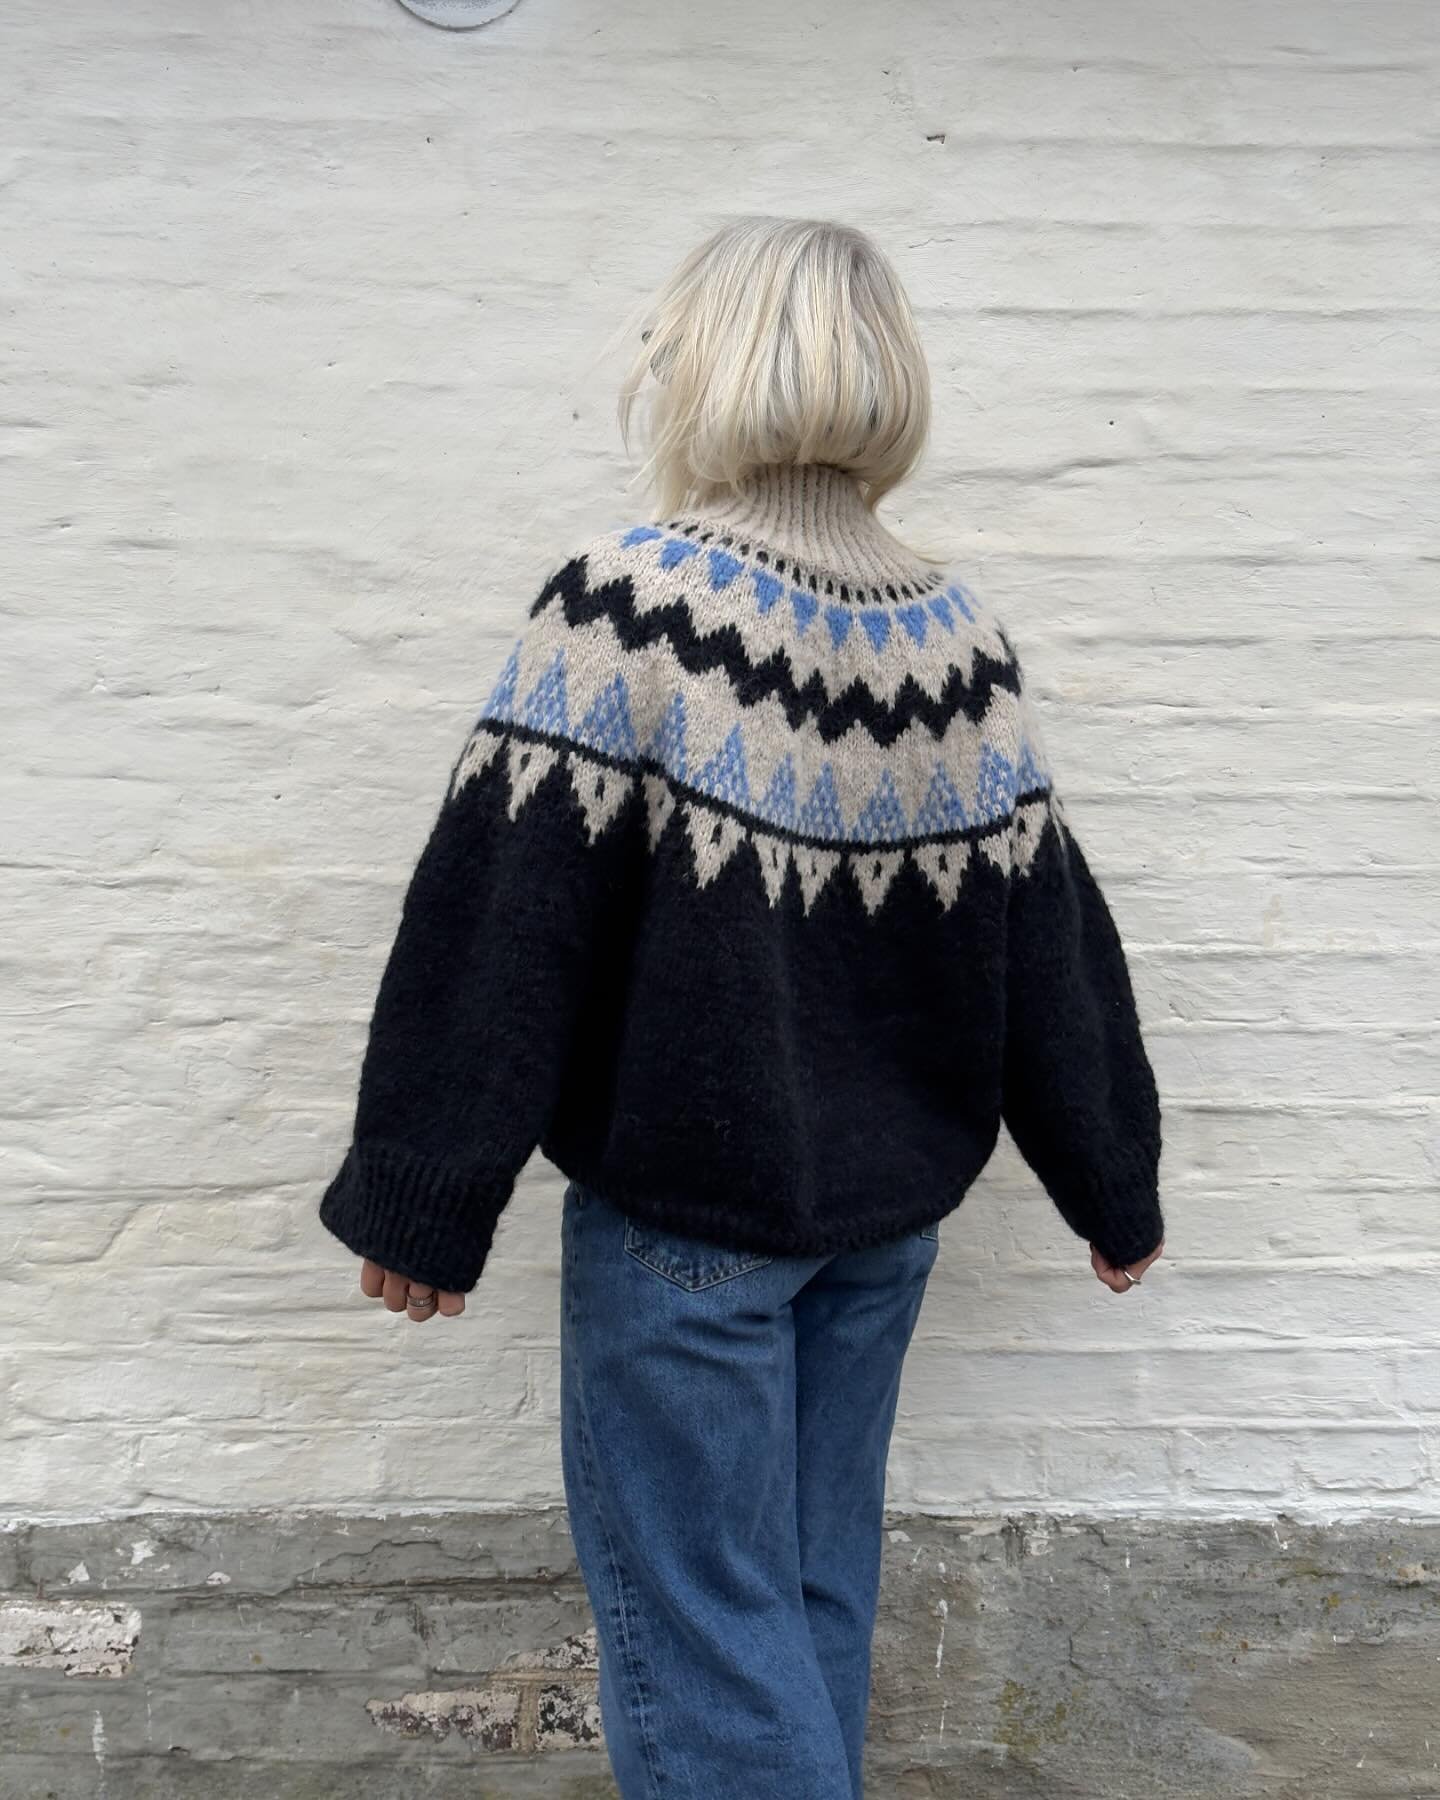 My Super Selene Sweater by @anneventzel. 
Made by @evakristinapersson.

#ppco #skeppsbron10 # #knit #knitting #b&oslash;rstedalpakka #sunday #superselenesweater #anneventzel